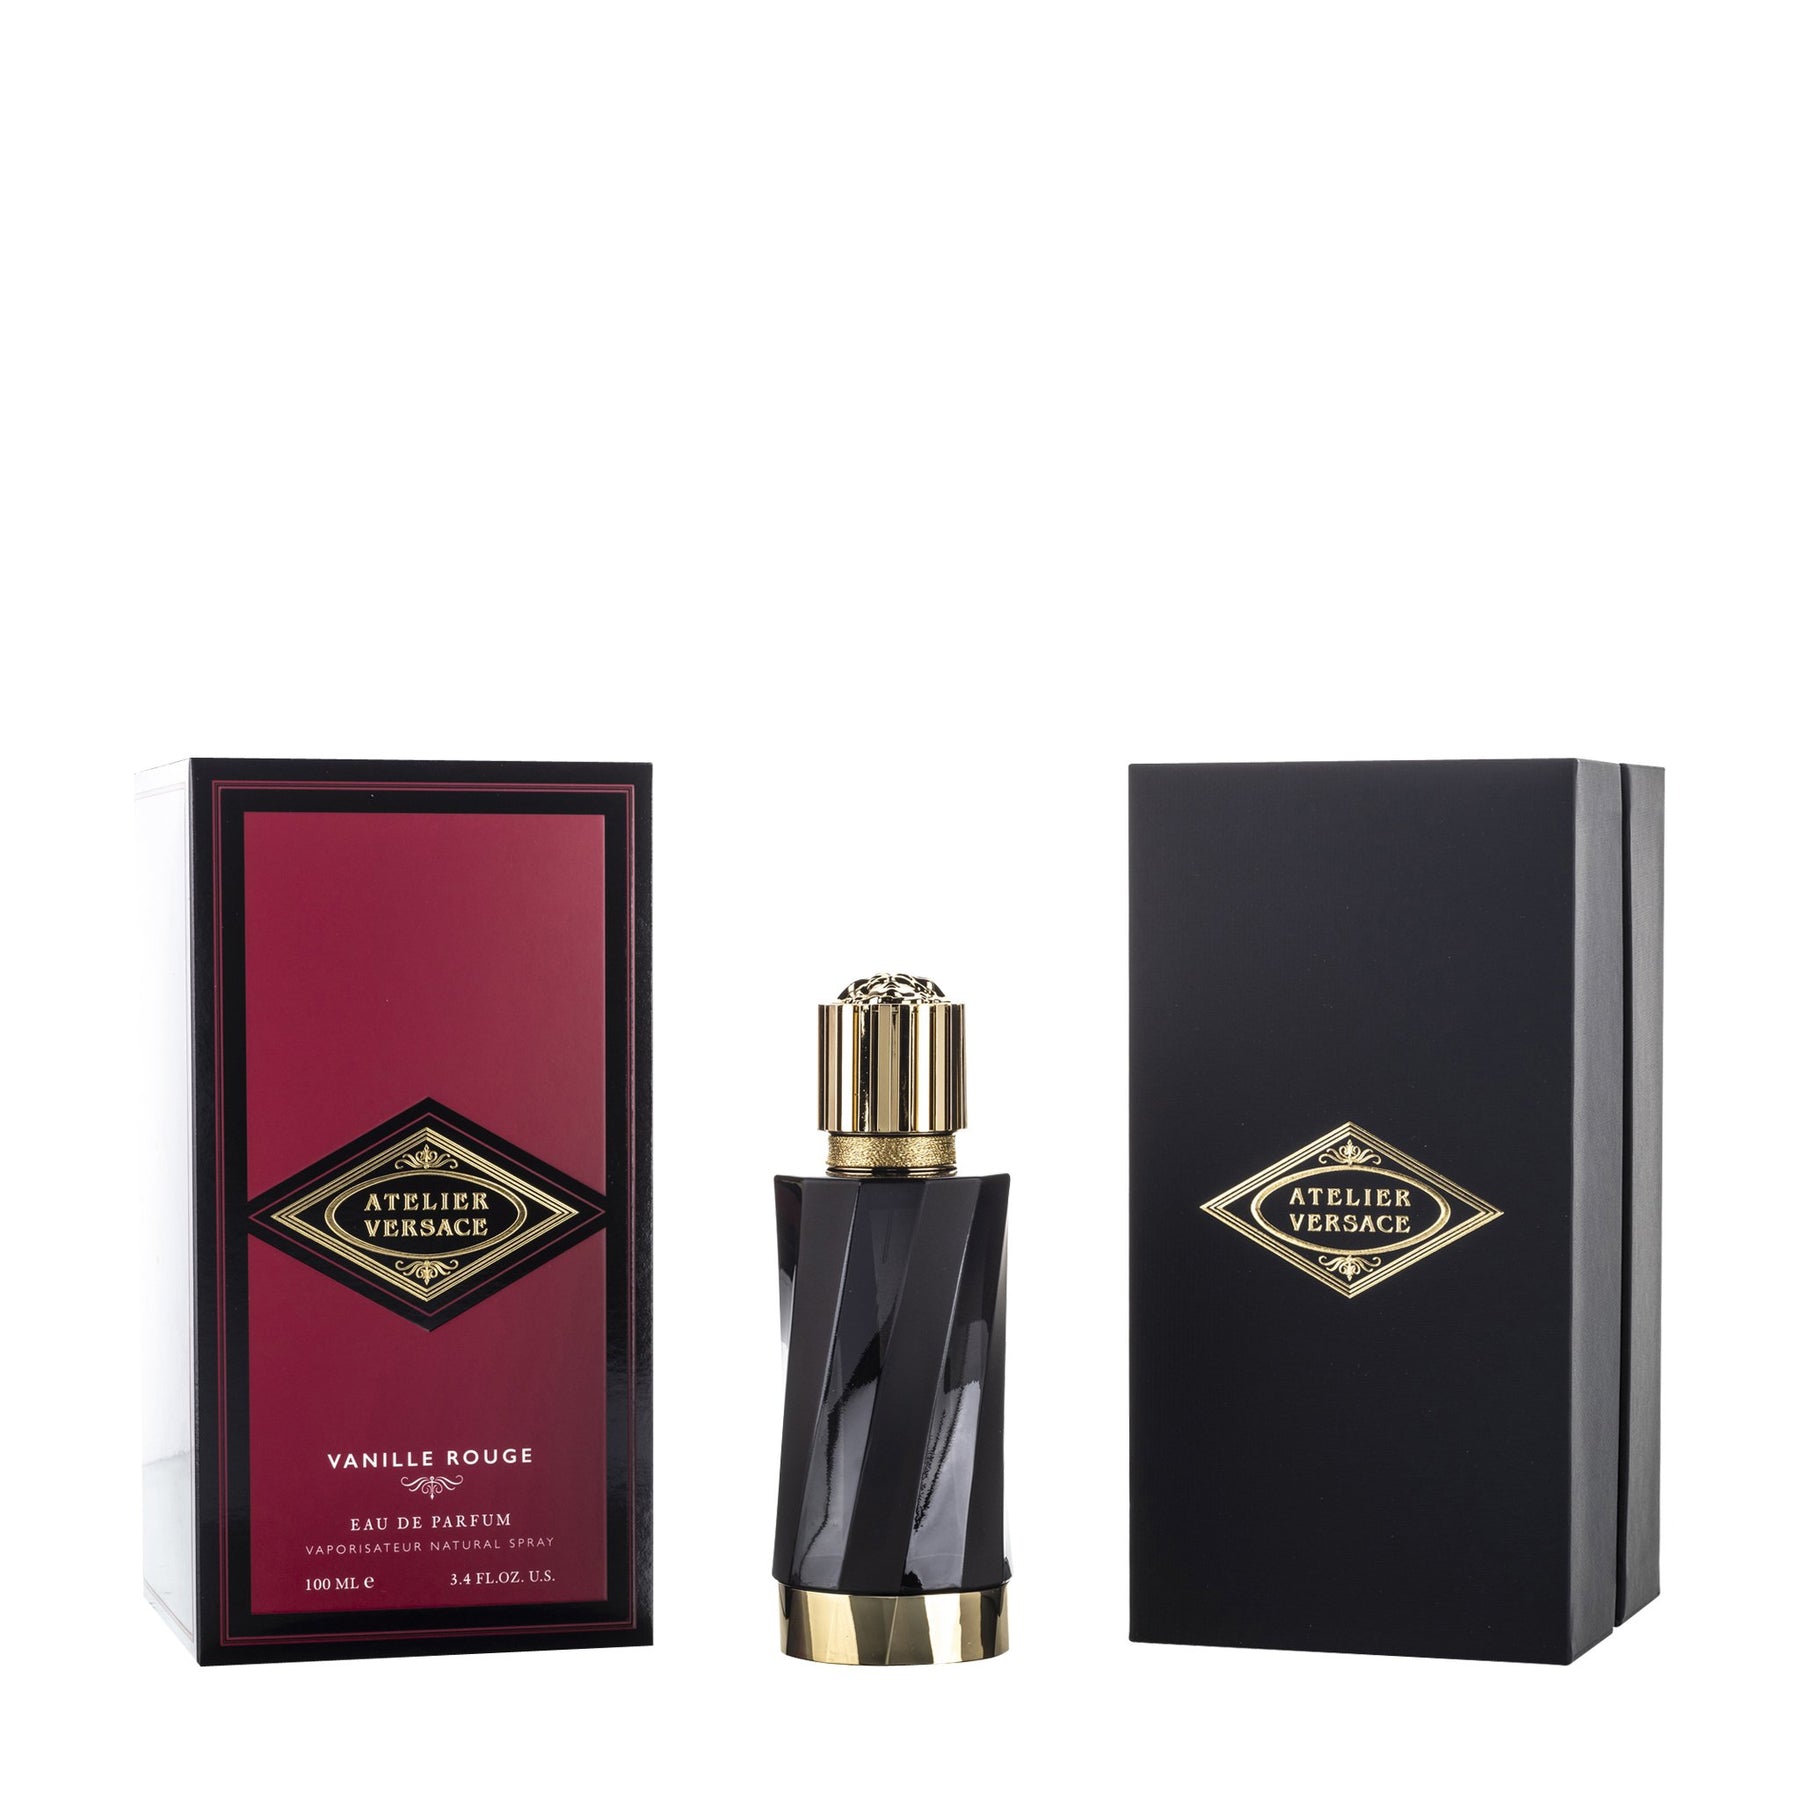 Atelier Versace Vanille Rouge - On Sale | FragranceSpot